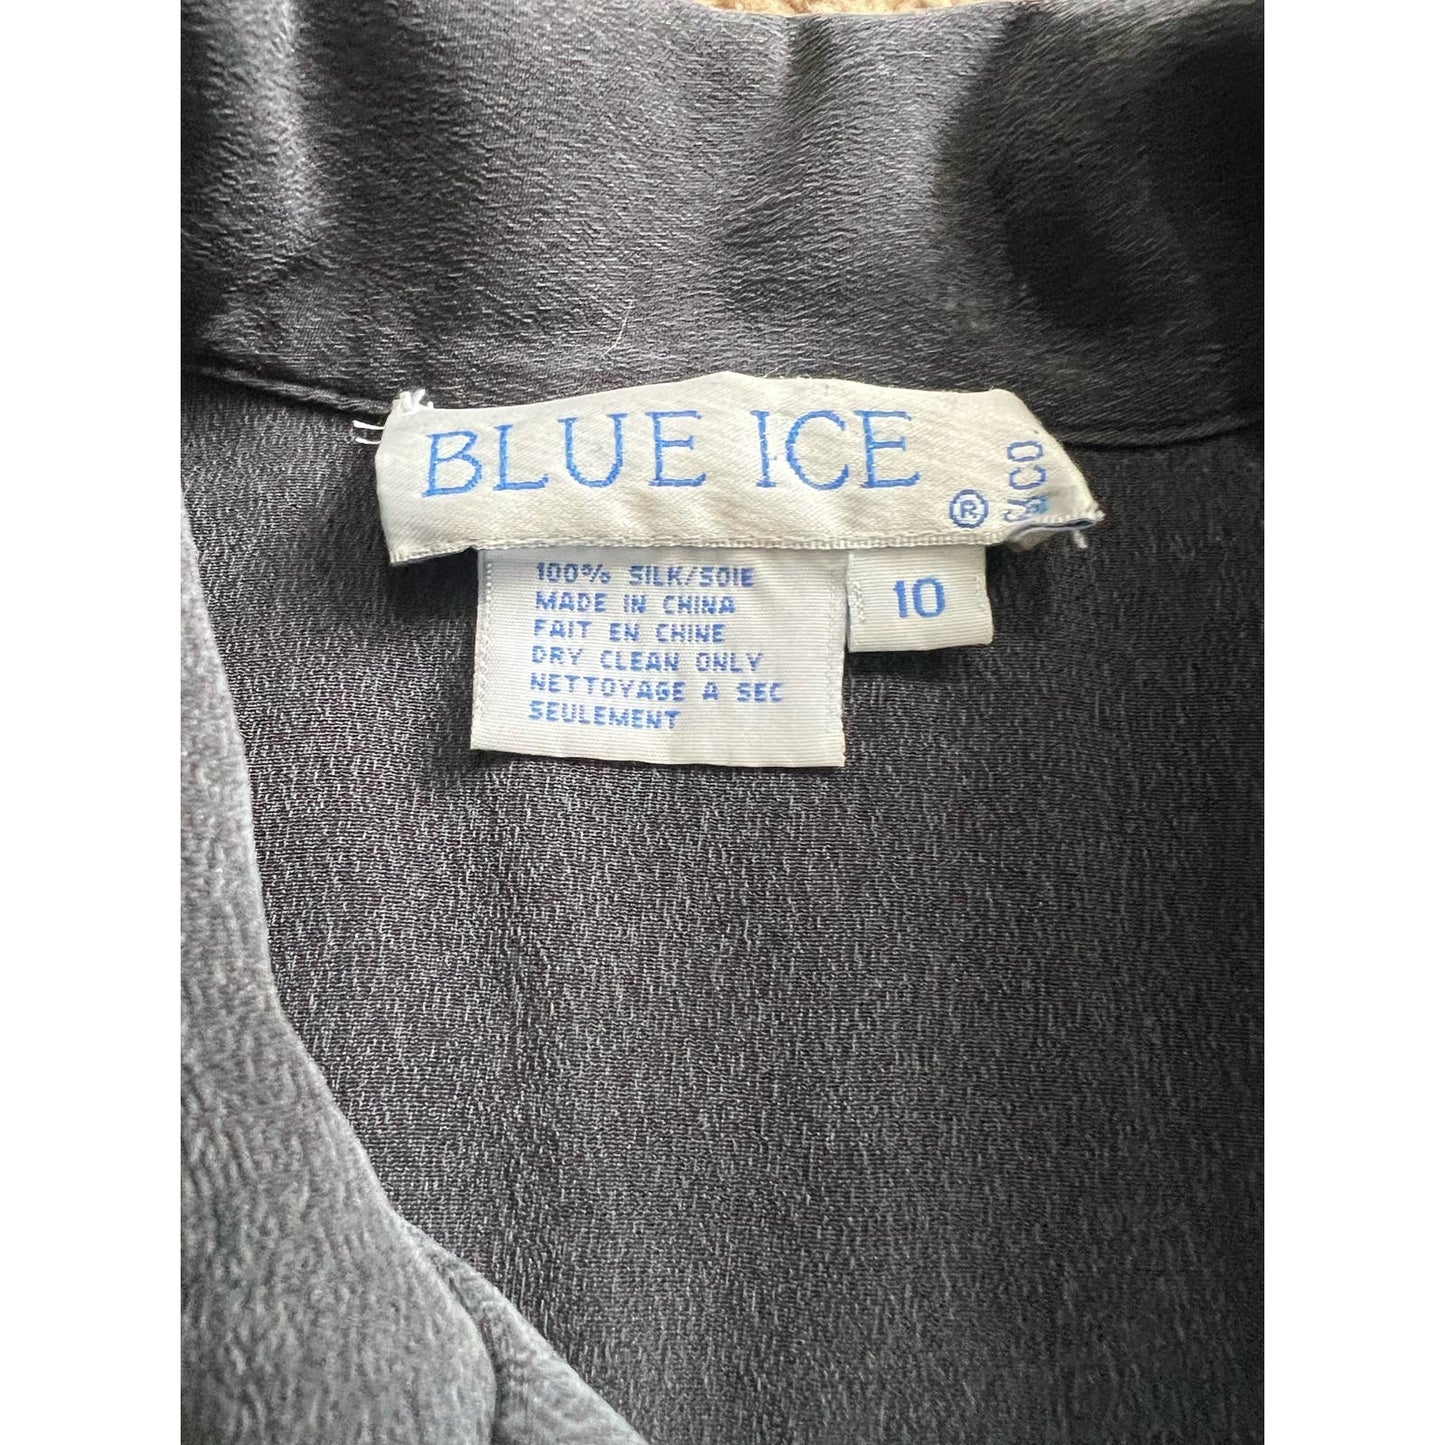 Blue Ice Vintage women’s silk top